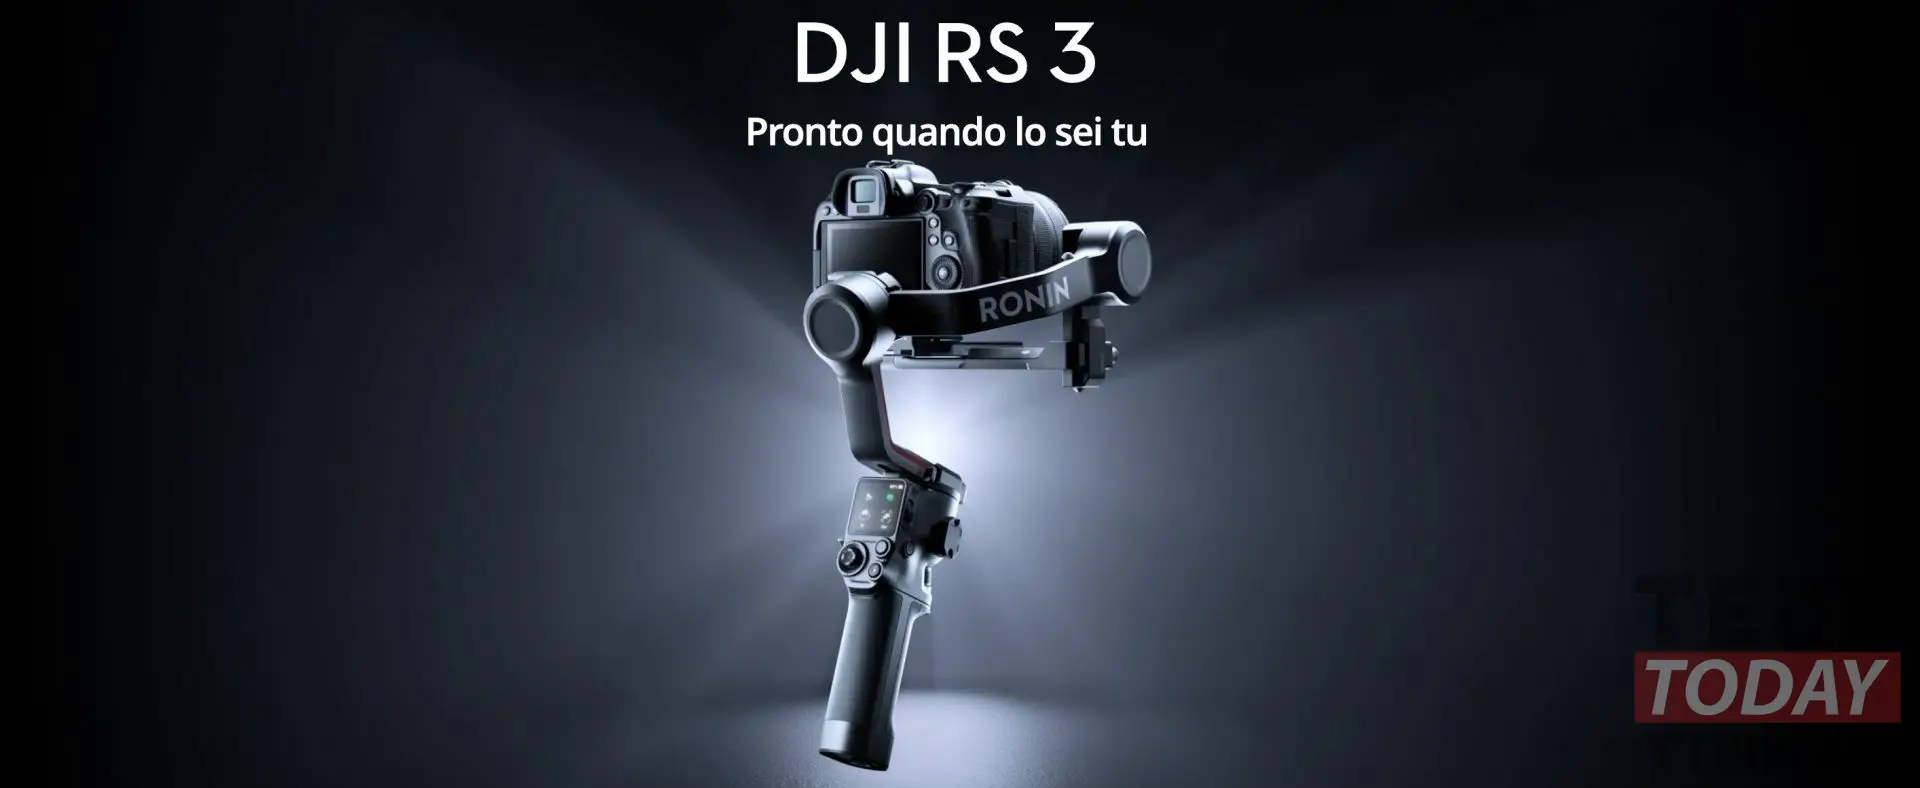 DJI RS 3 Pro